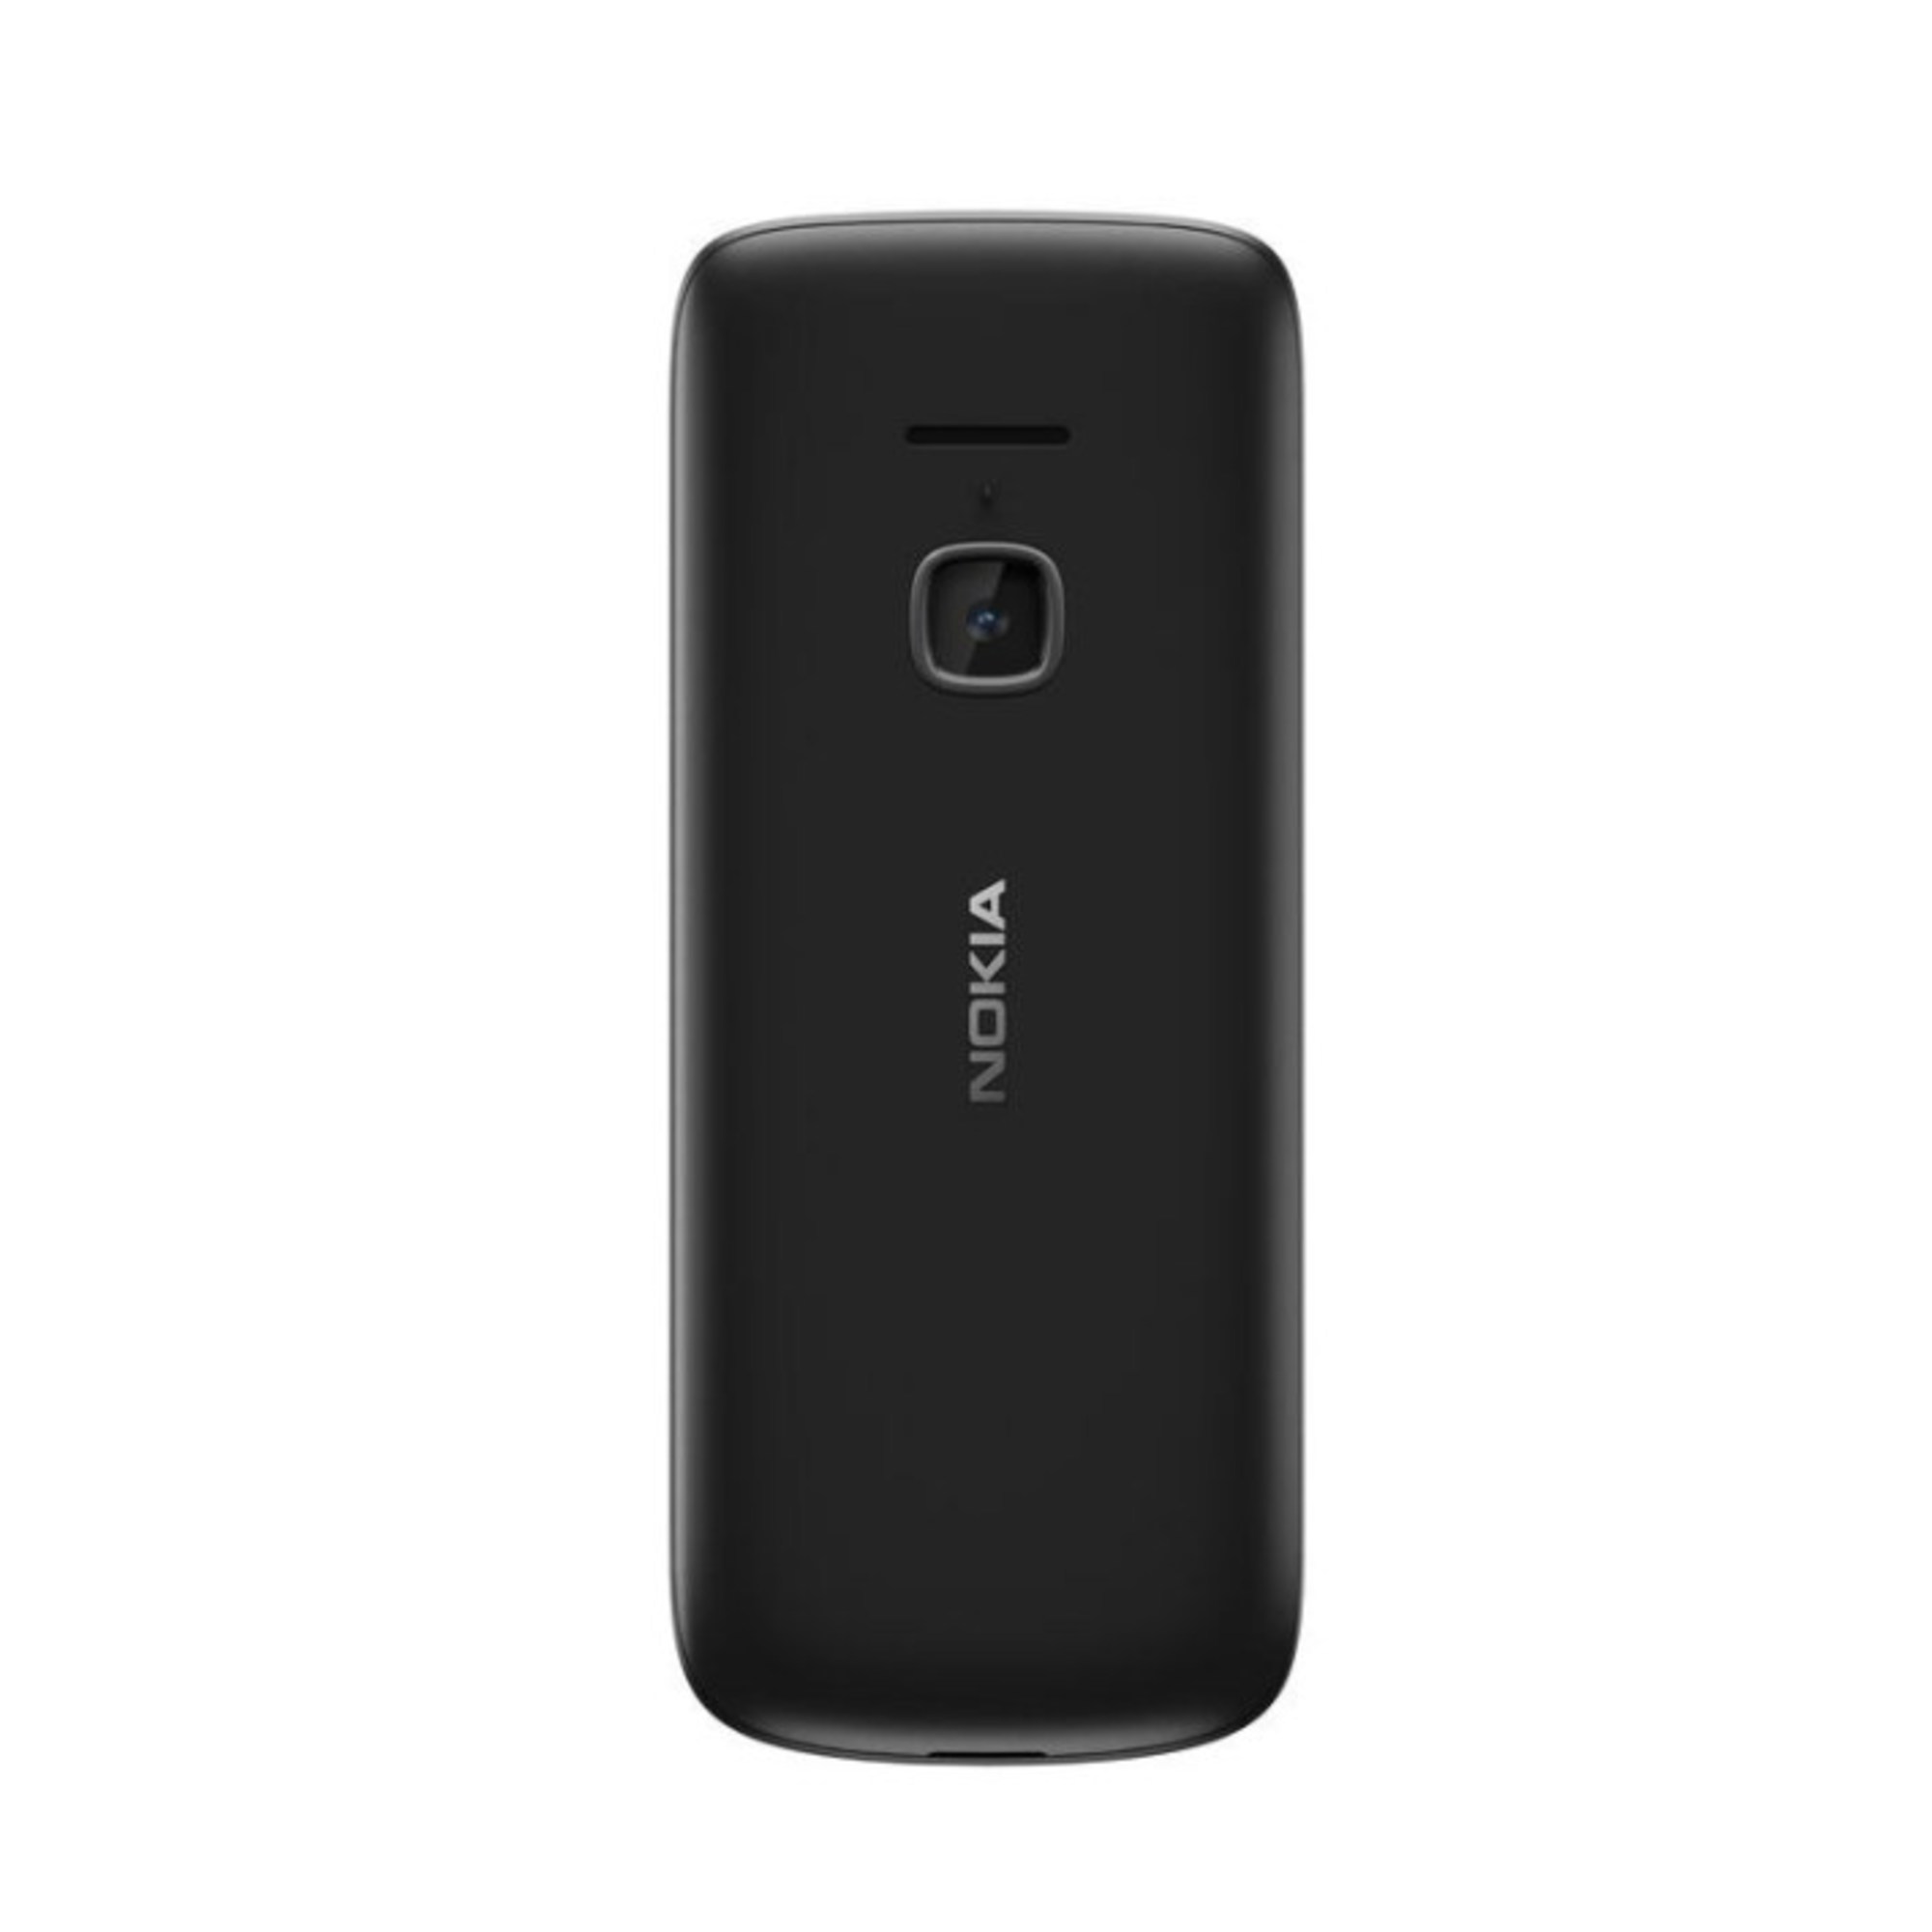 Nokia 225 4G TA-1282 GSM Unlocked Phone, Black - image 2 of 4